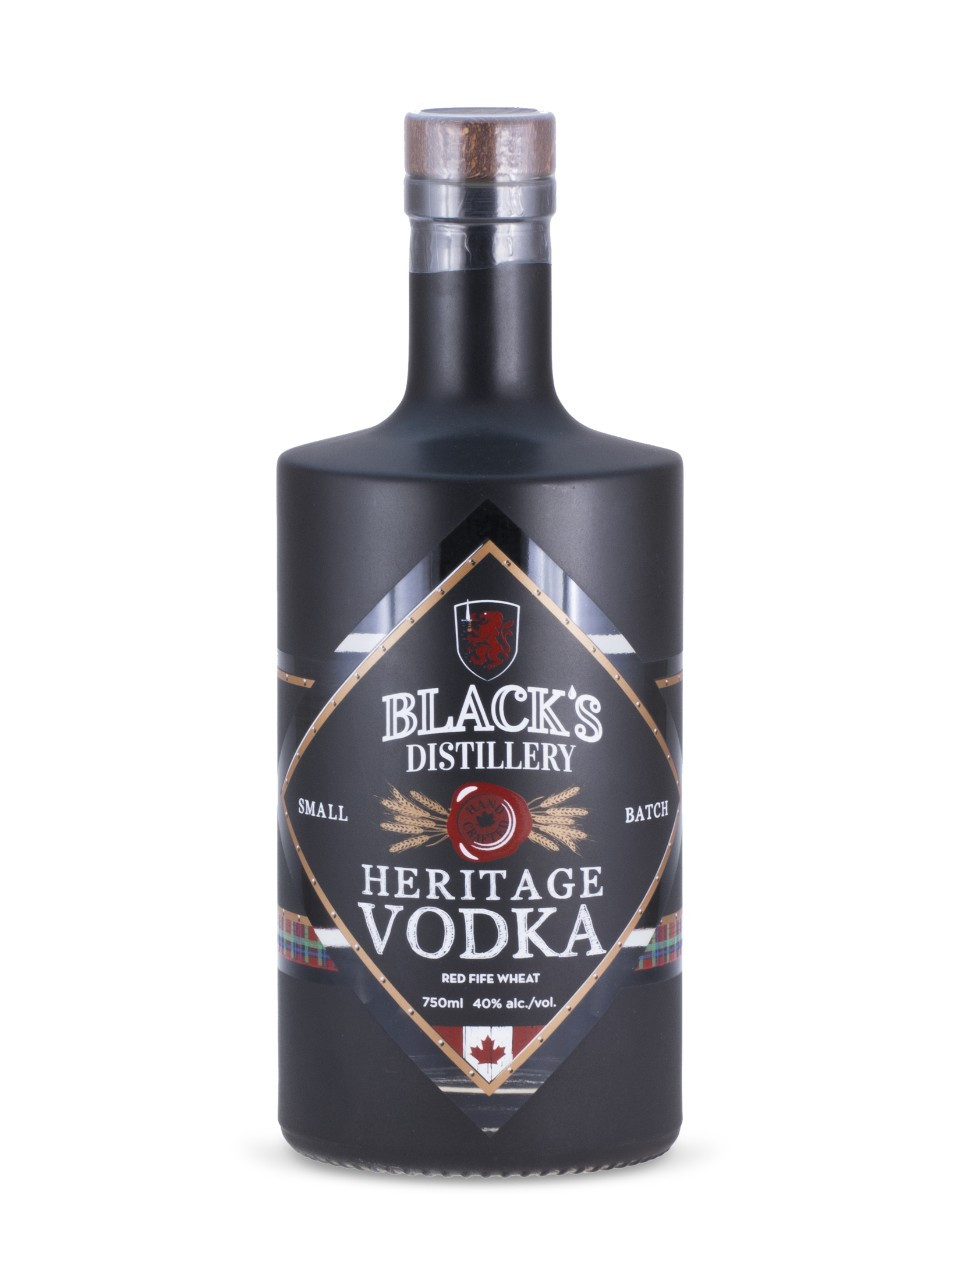 Black's distillery heritage vodka